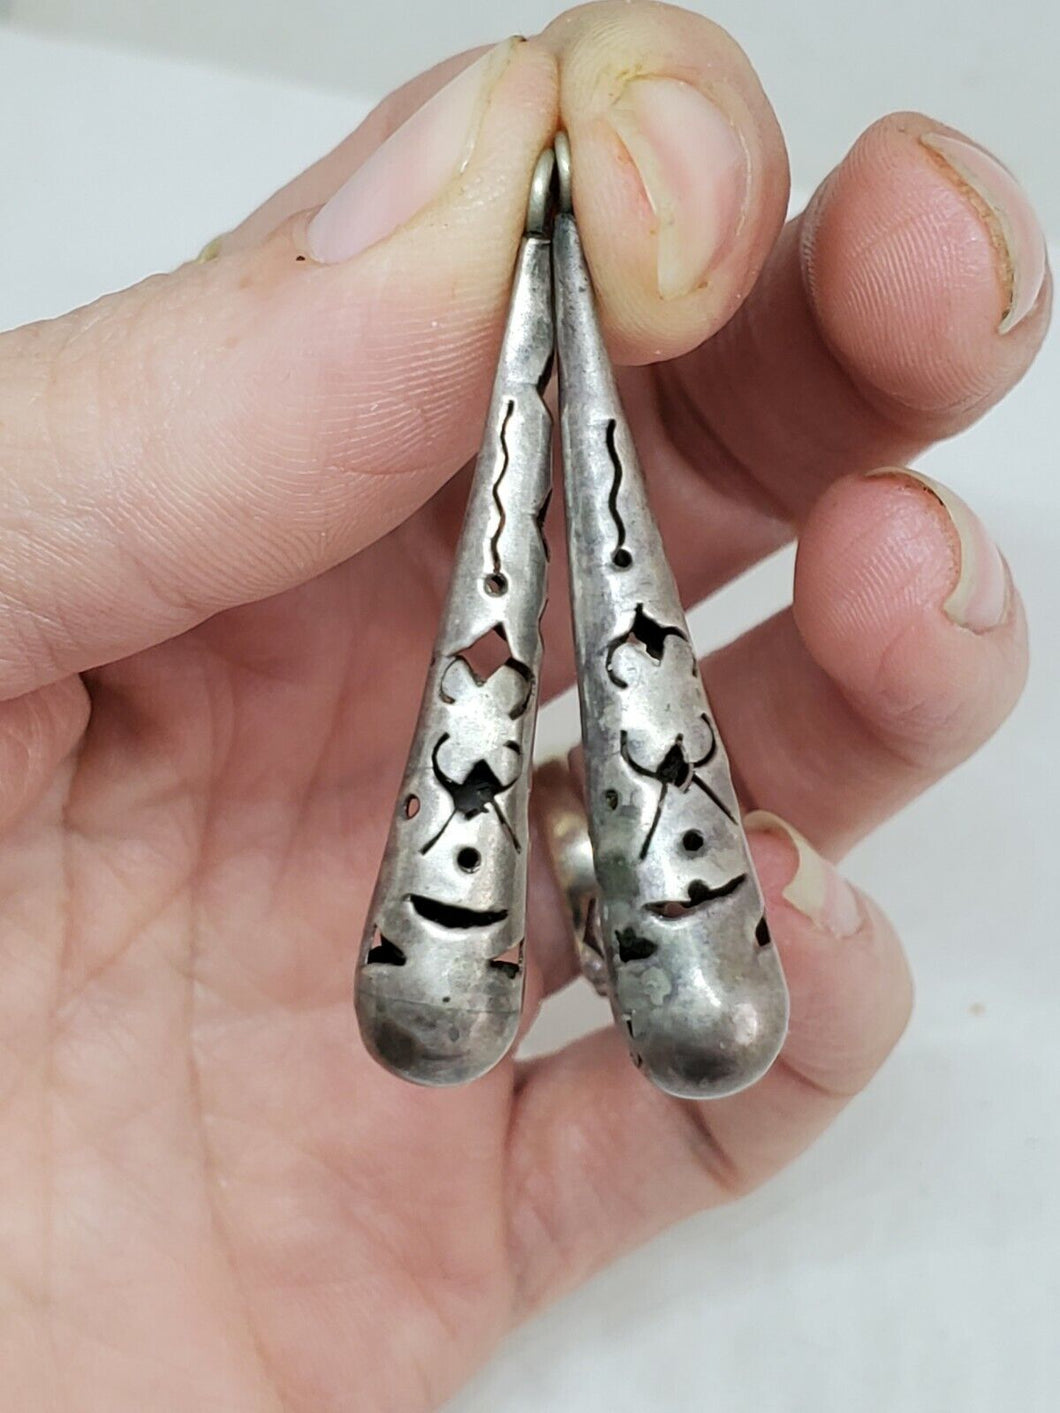 Vintage Navajo Sterling Silver Hand Pierced Teardrop Earrings